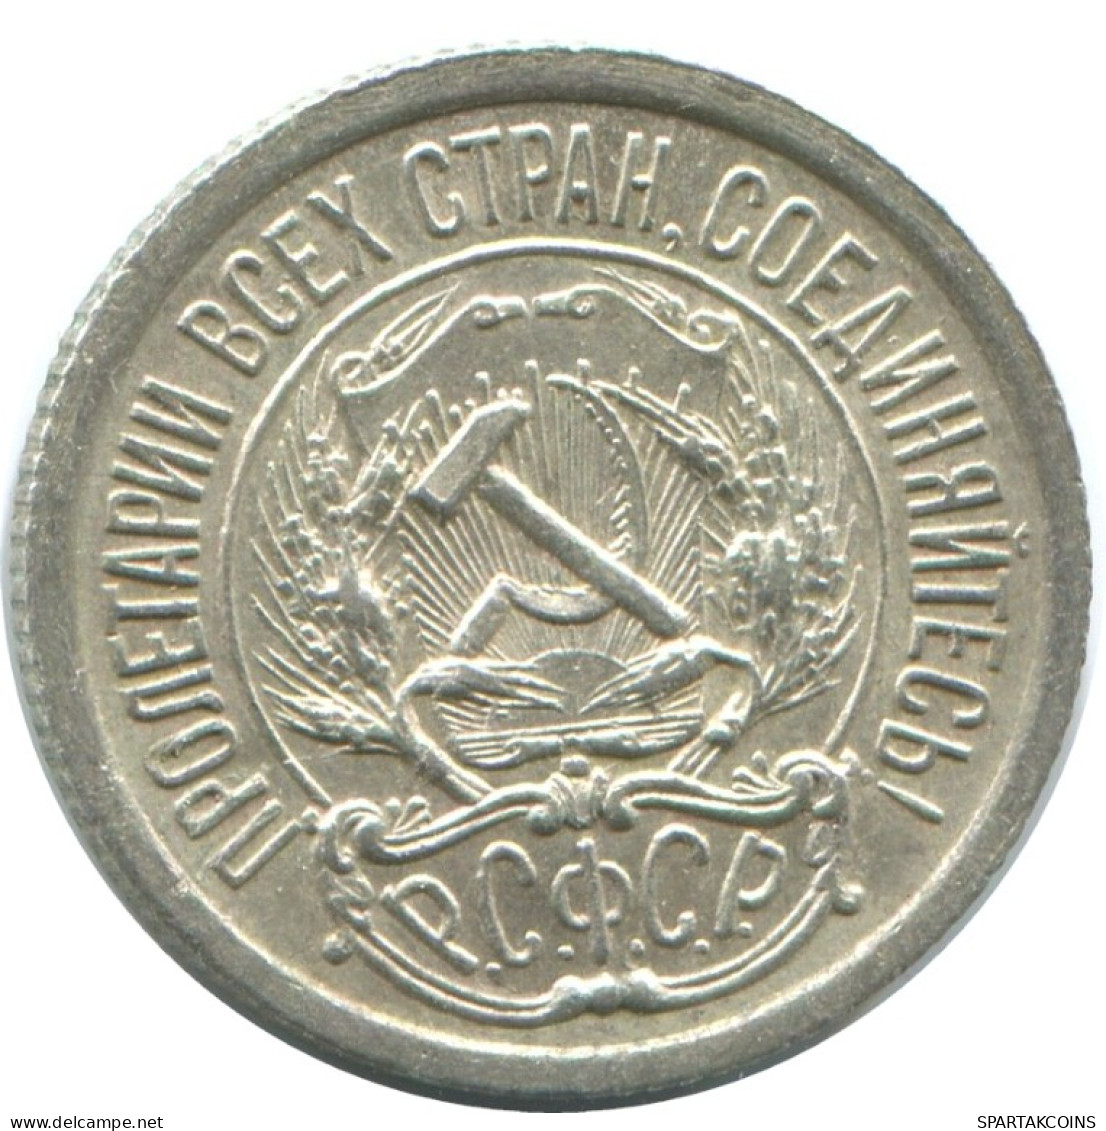 10 KOPEKS 1923 RUSSIA RSFSR SILVER Coin HIGH GRADE #AE991.4.U.A - Russland